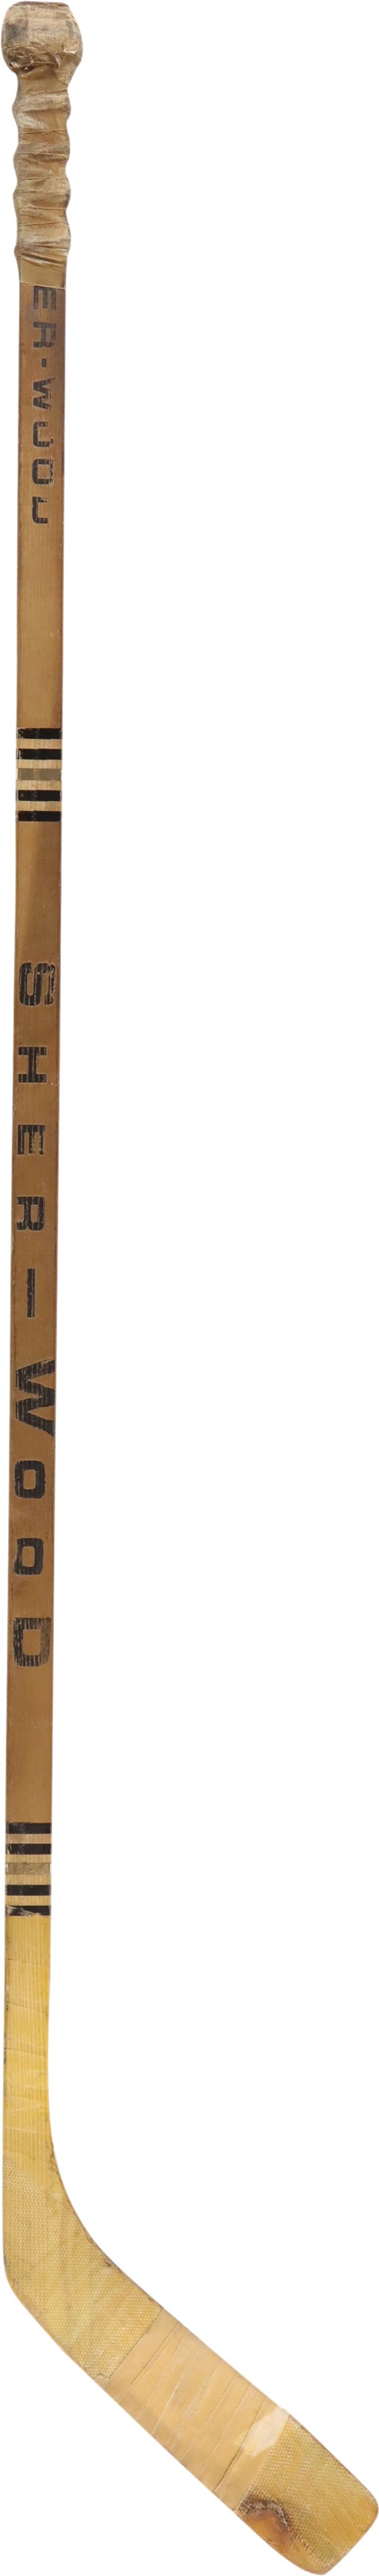 Hockey - Brad Park Game Used Sher-Wood Hockey Stick